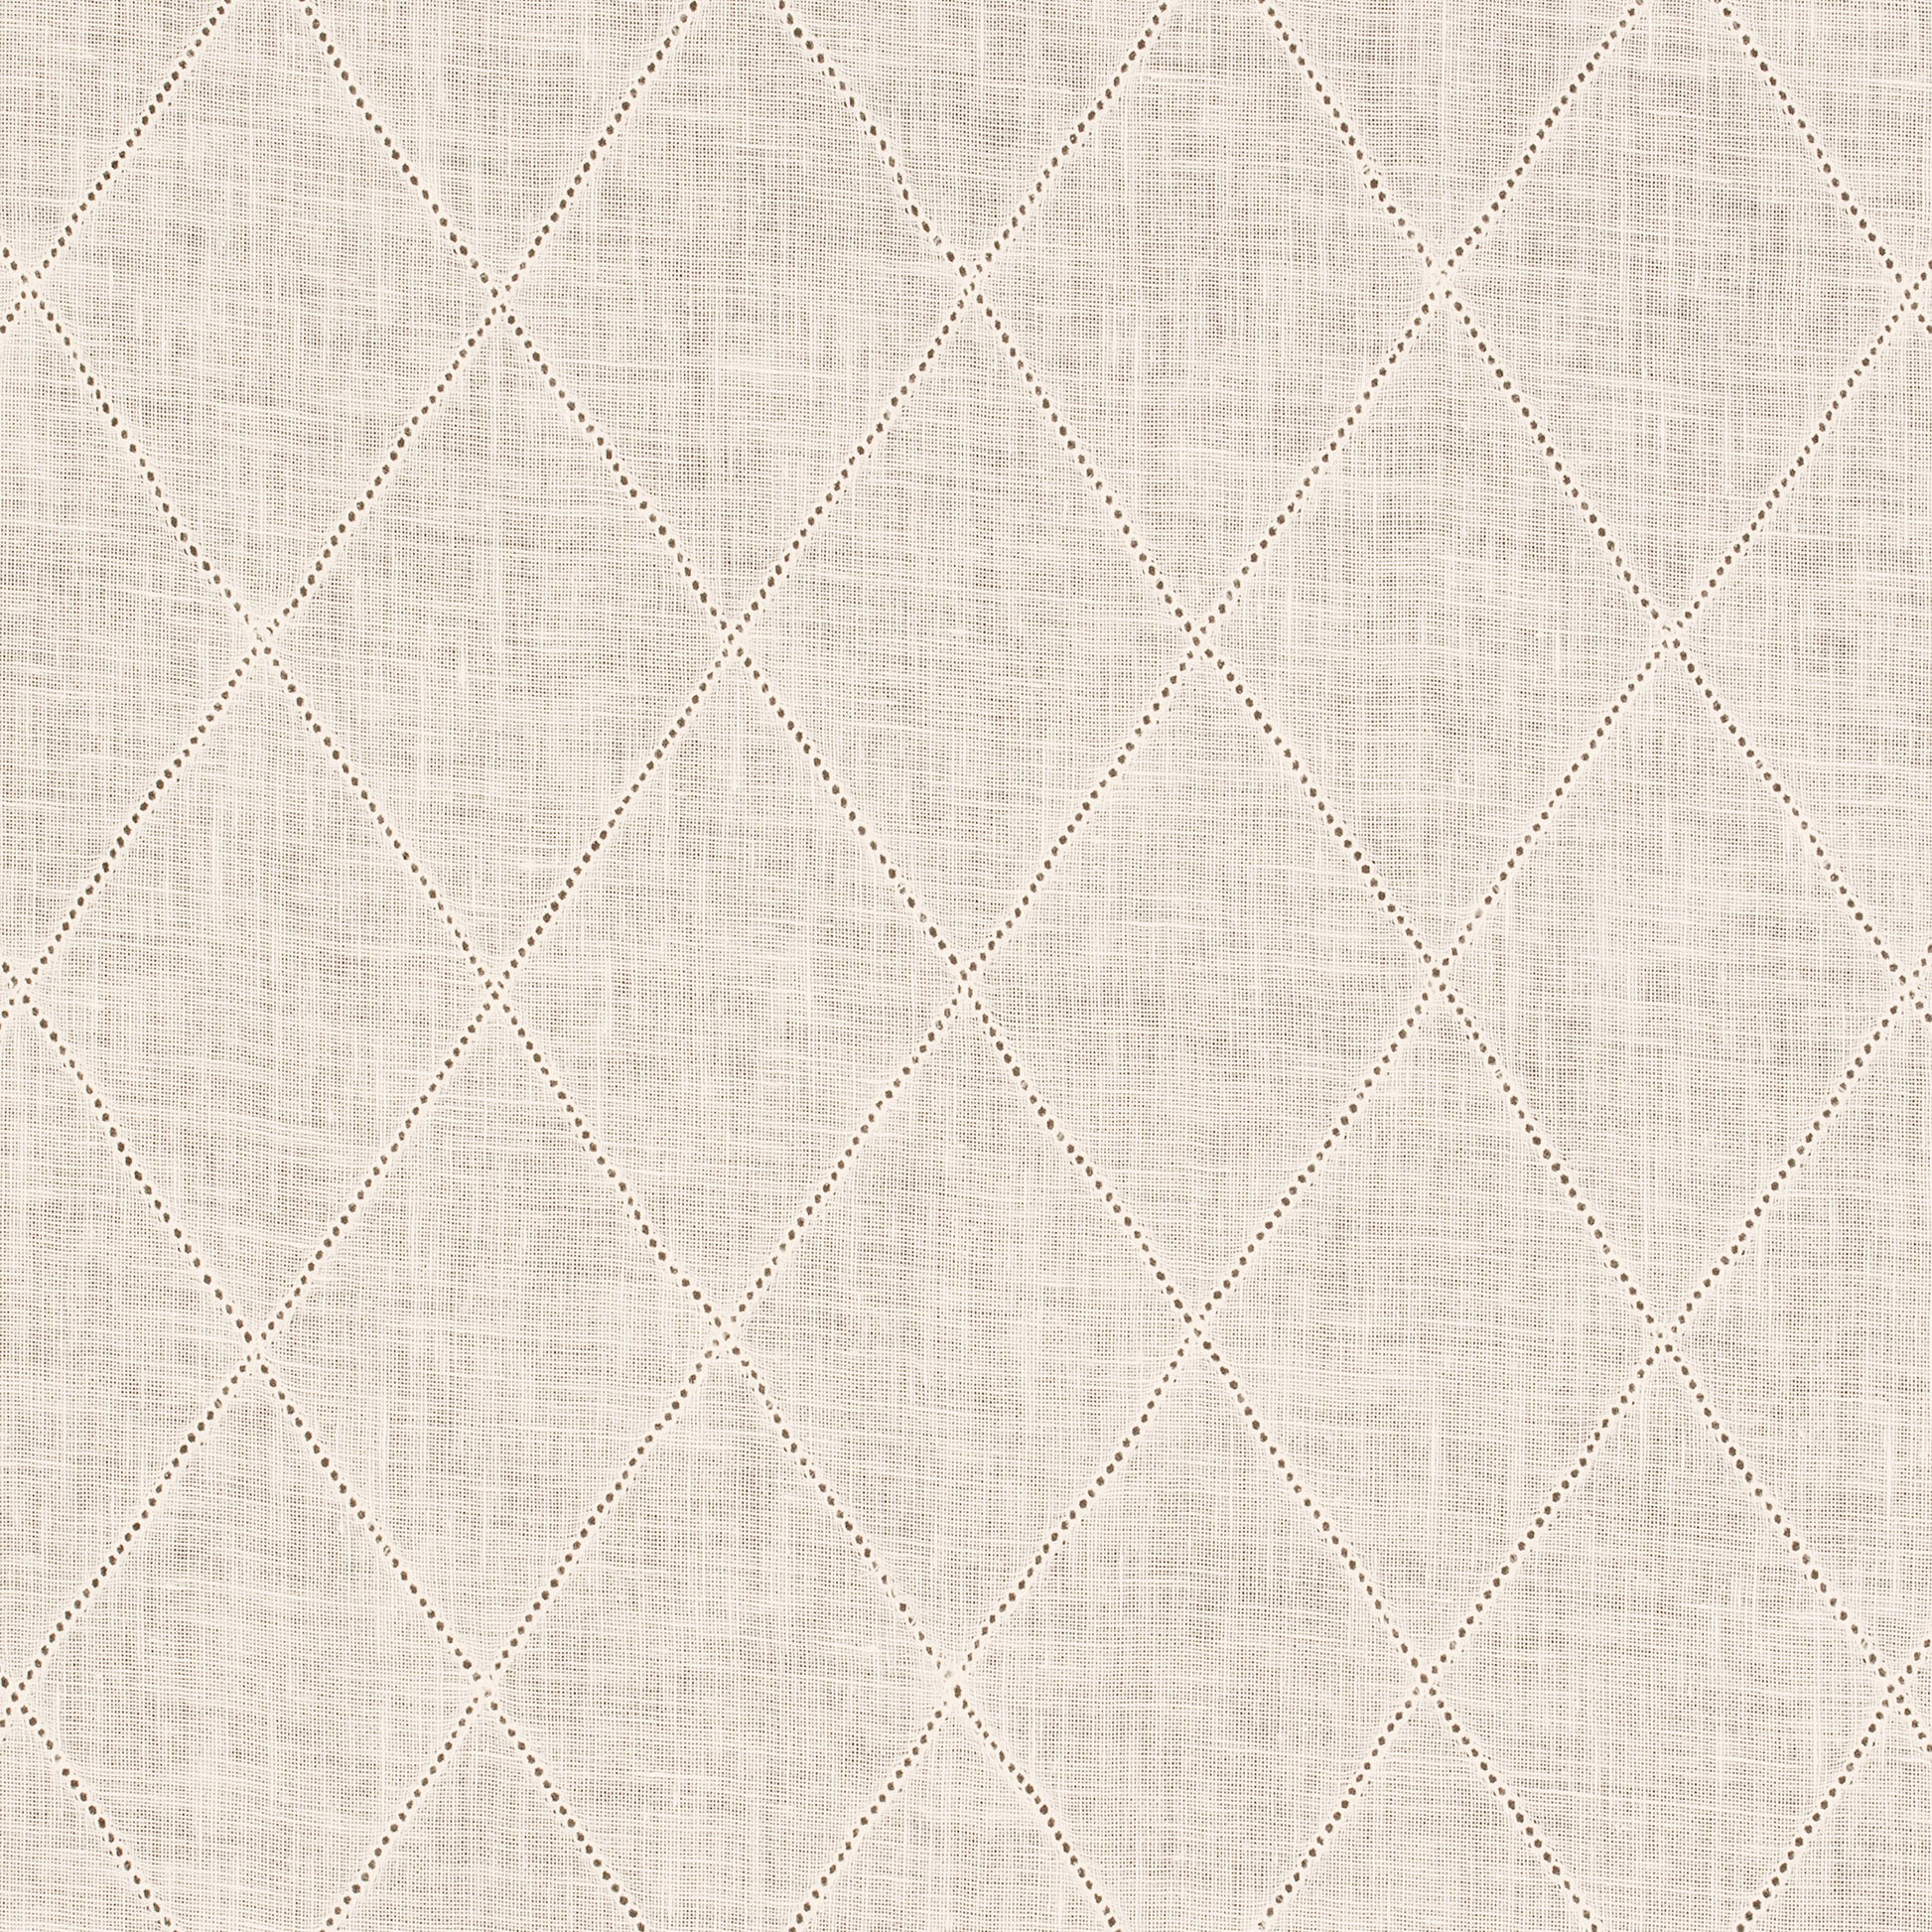 Purchase Thibaut Fabric Item# W772588 pattern name Claremont Trellis color Ivory